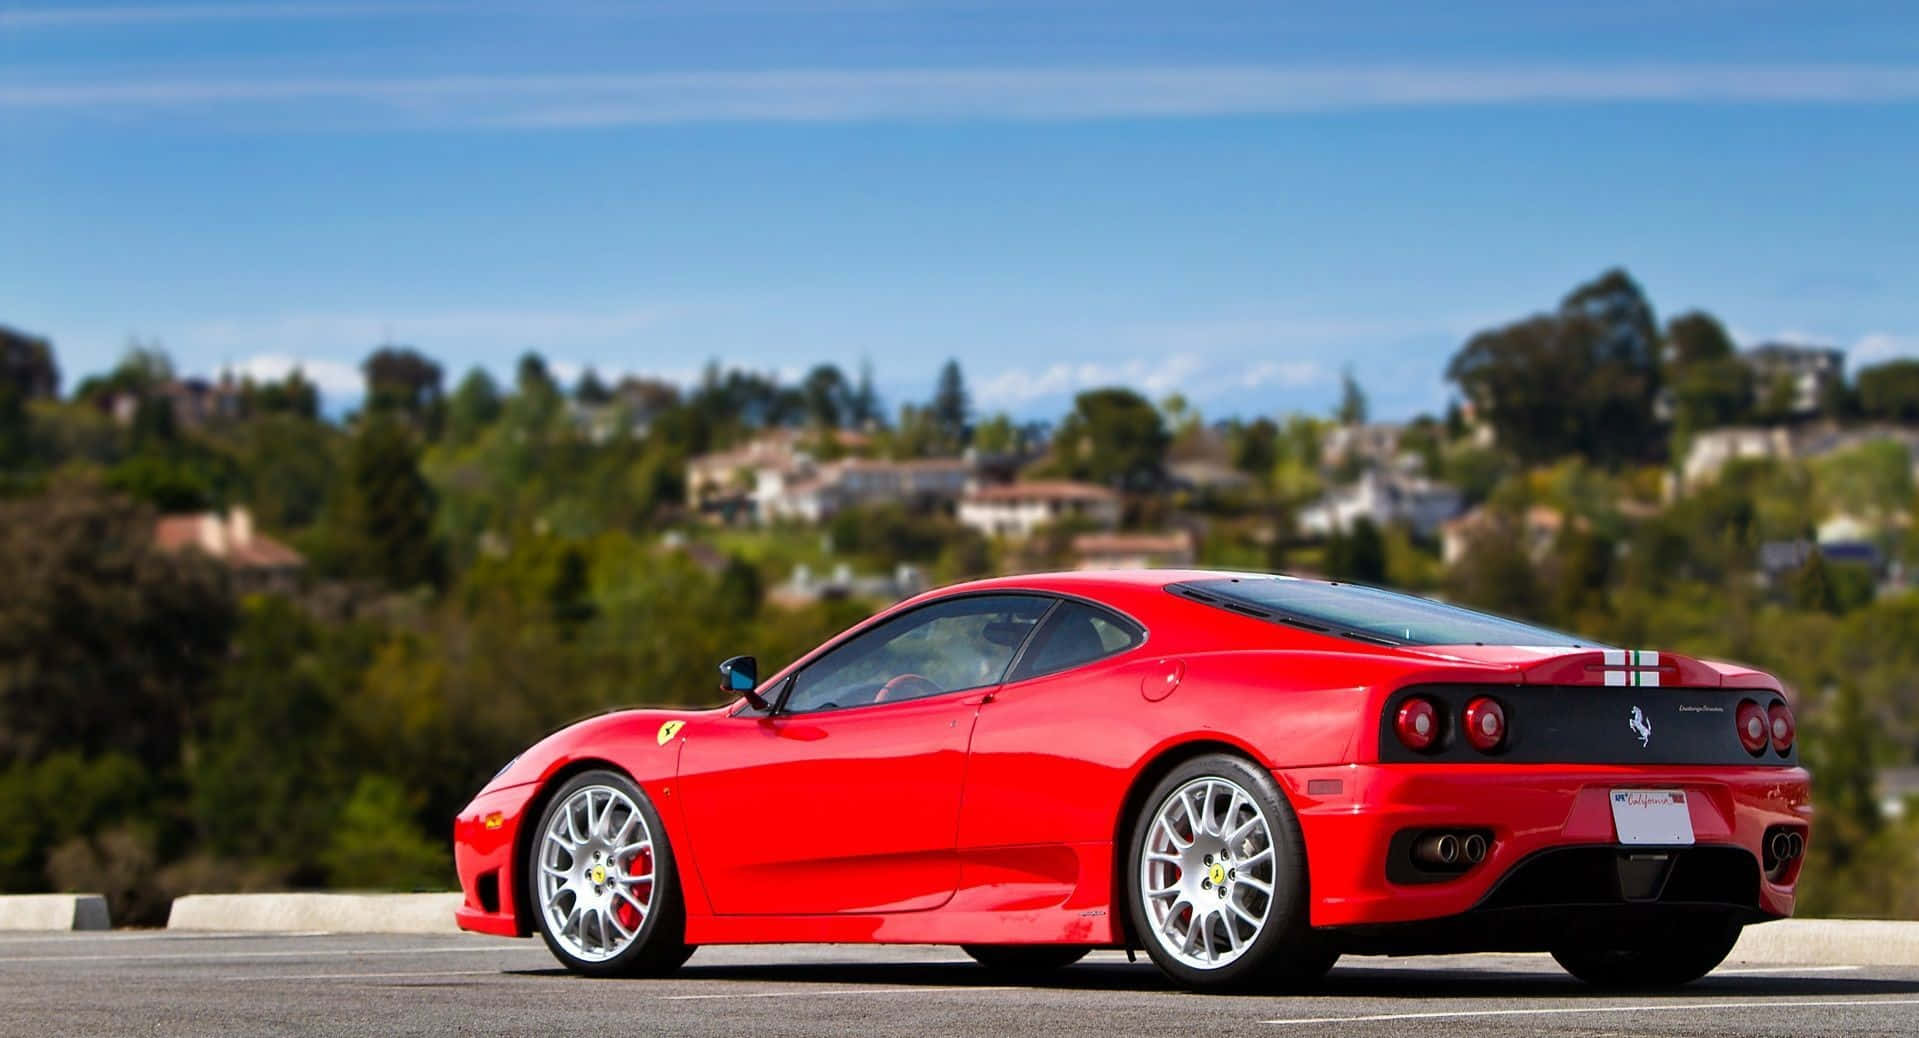 Stunning Red Ferrari 360 Modena on Open Road Wallpaper